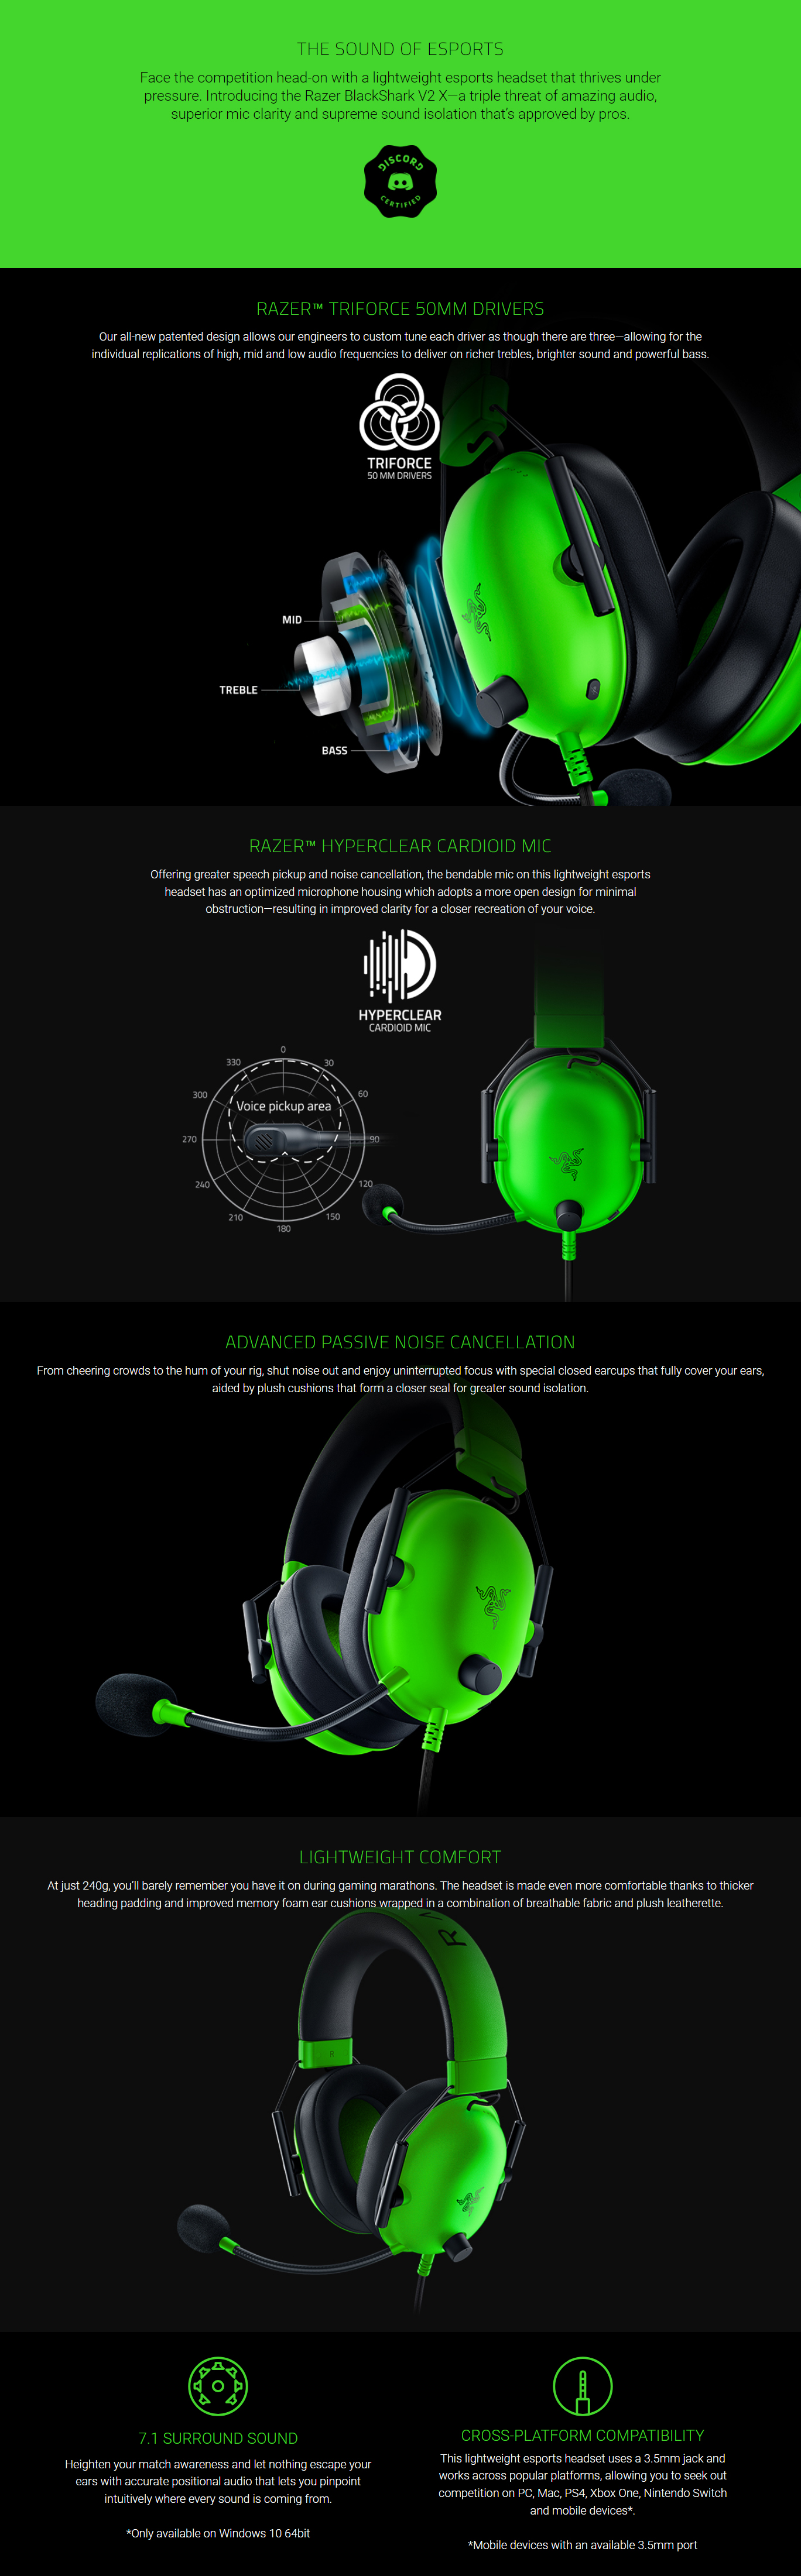 Headphones-Razer-BlackShark-V2-X-Wired-Gaming-Headset-Green-RZ04-03240600-R3M1-1